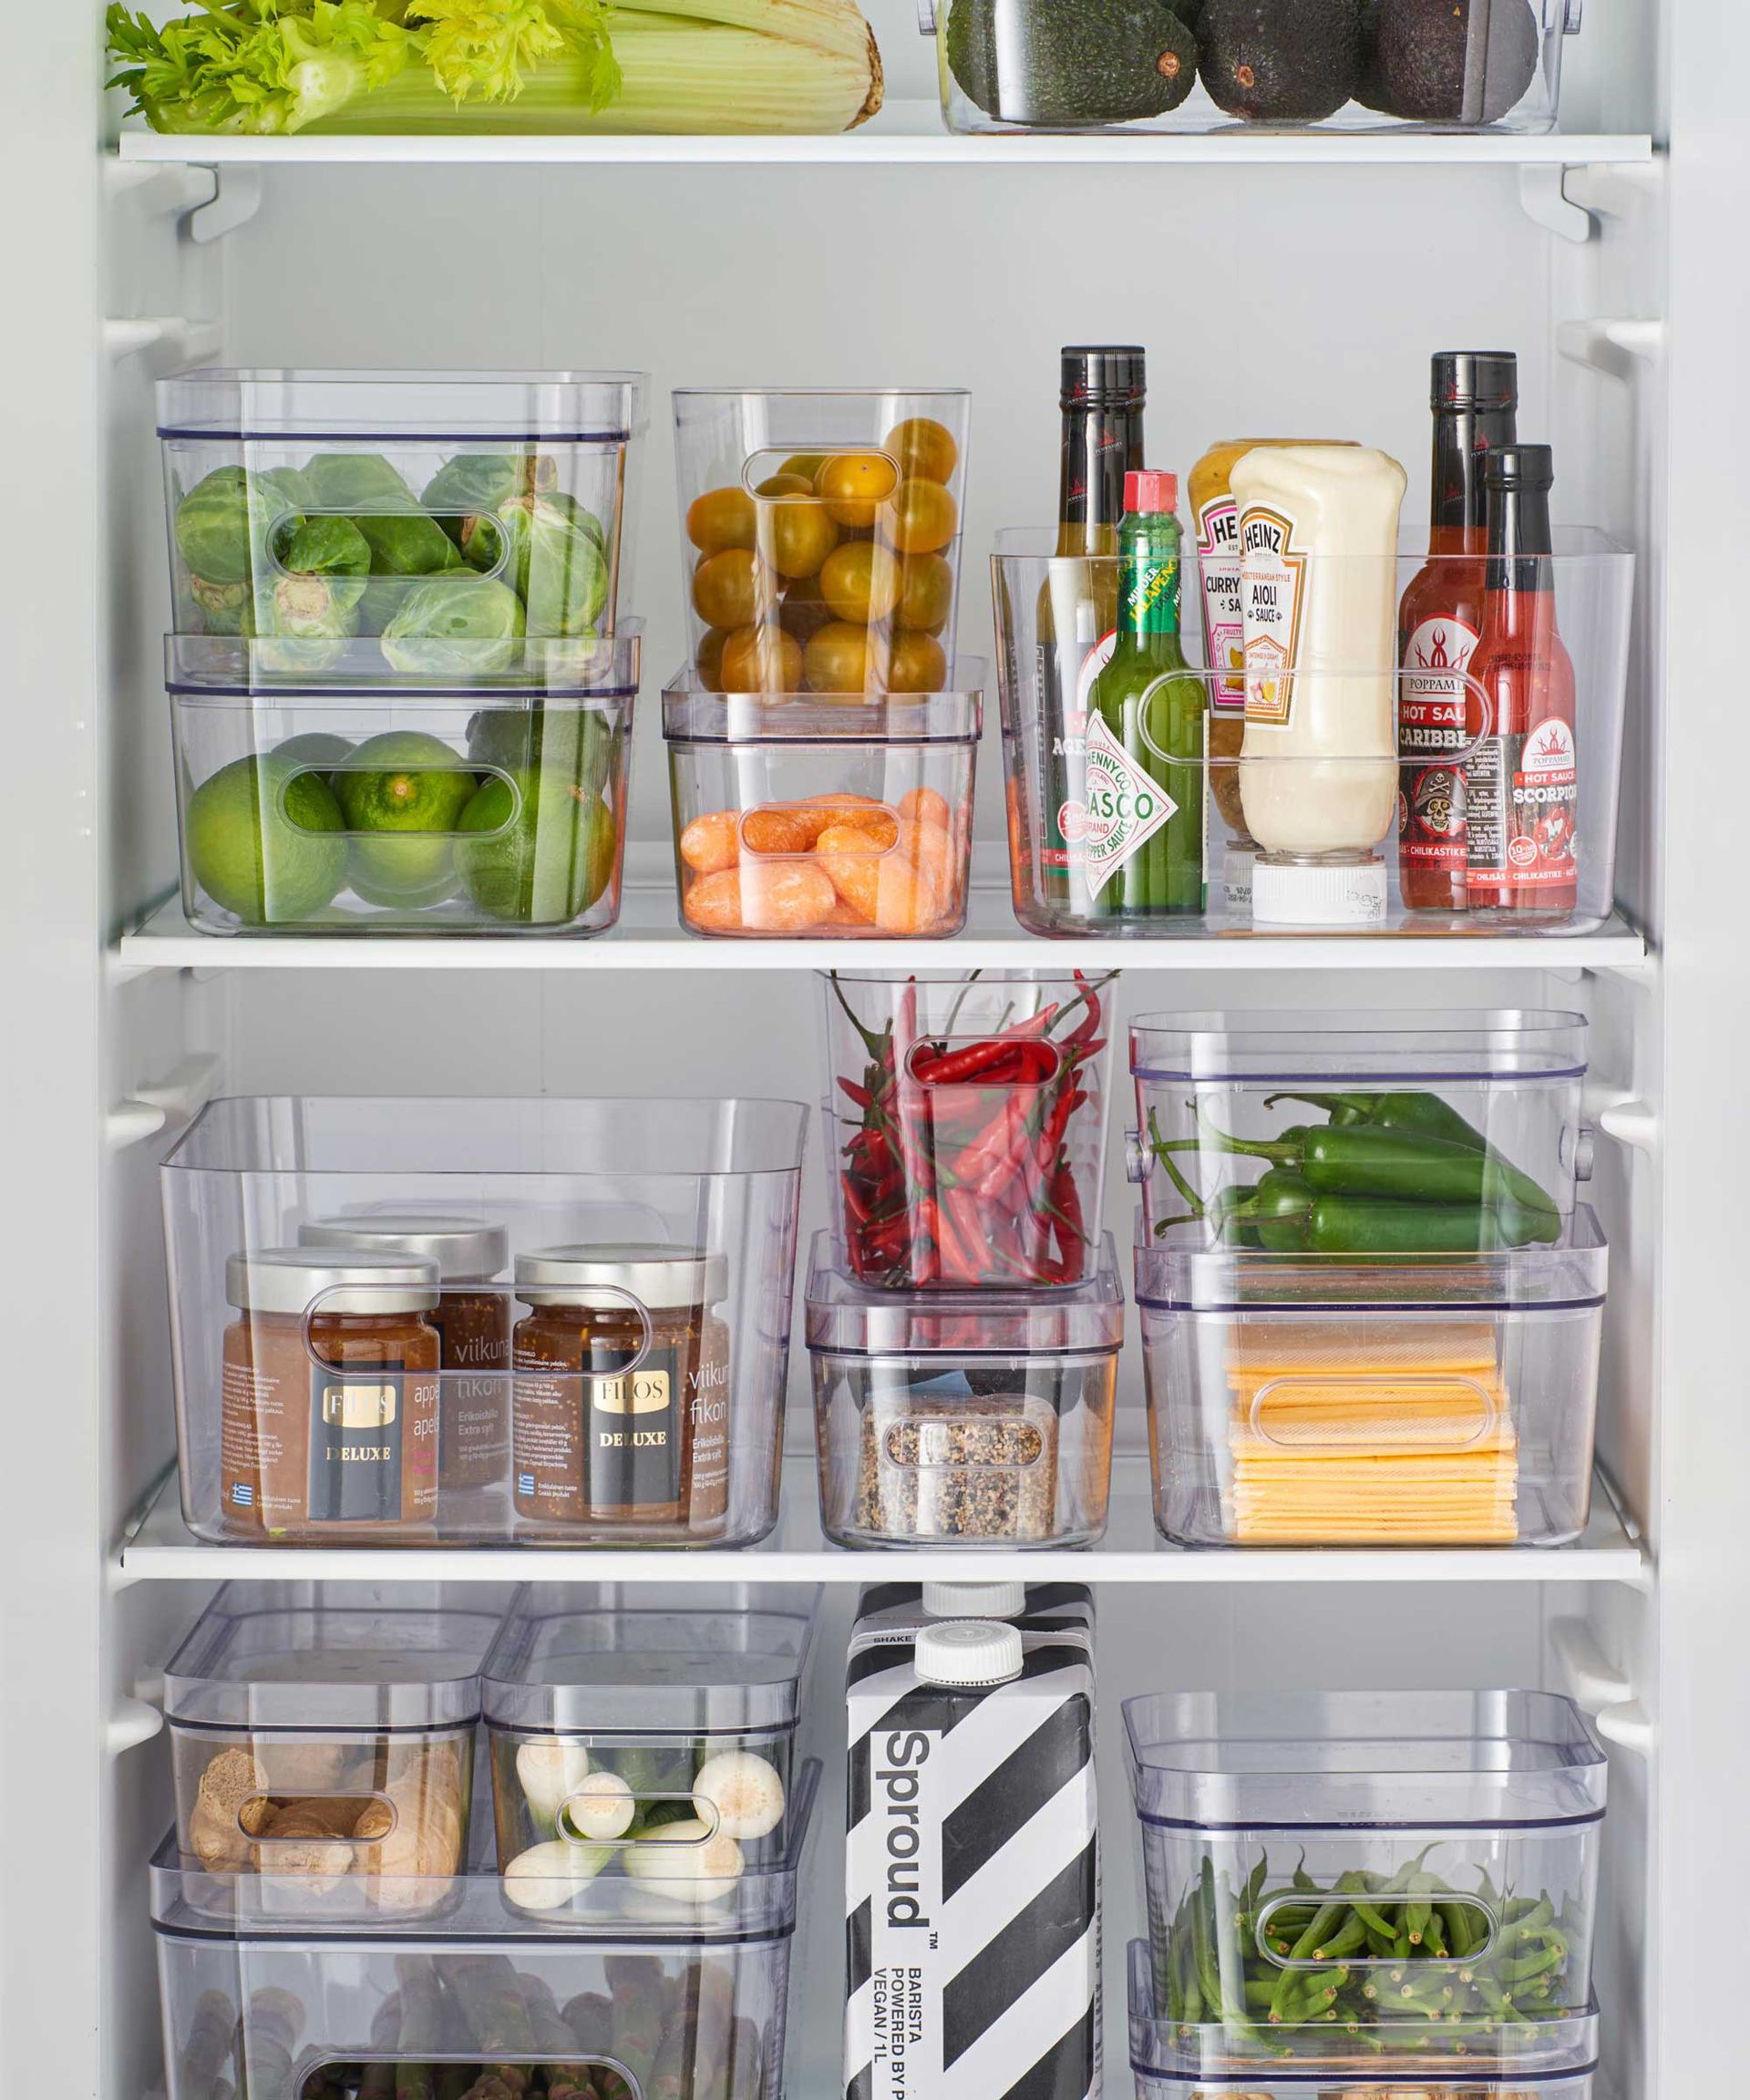 Organizing a refrigerator: safe ways to keep food fresh